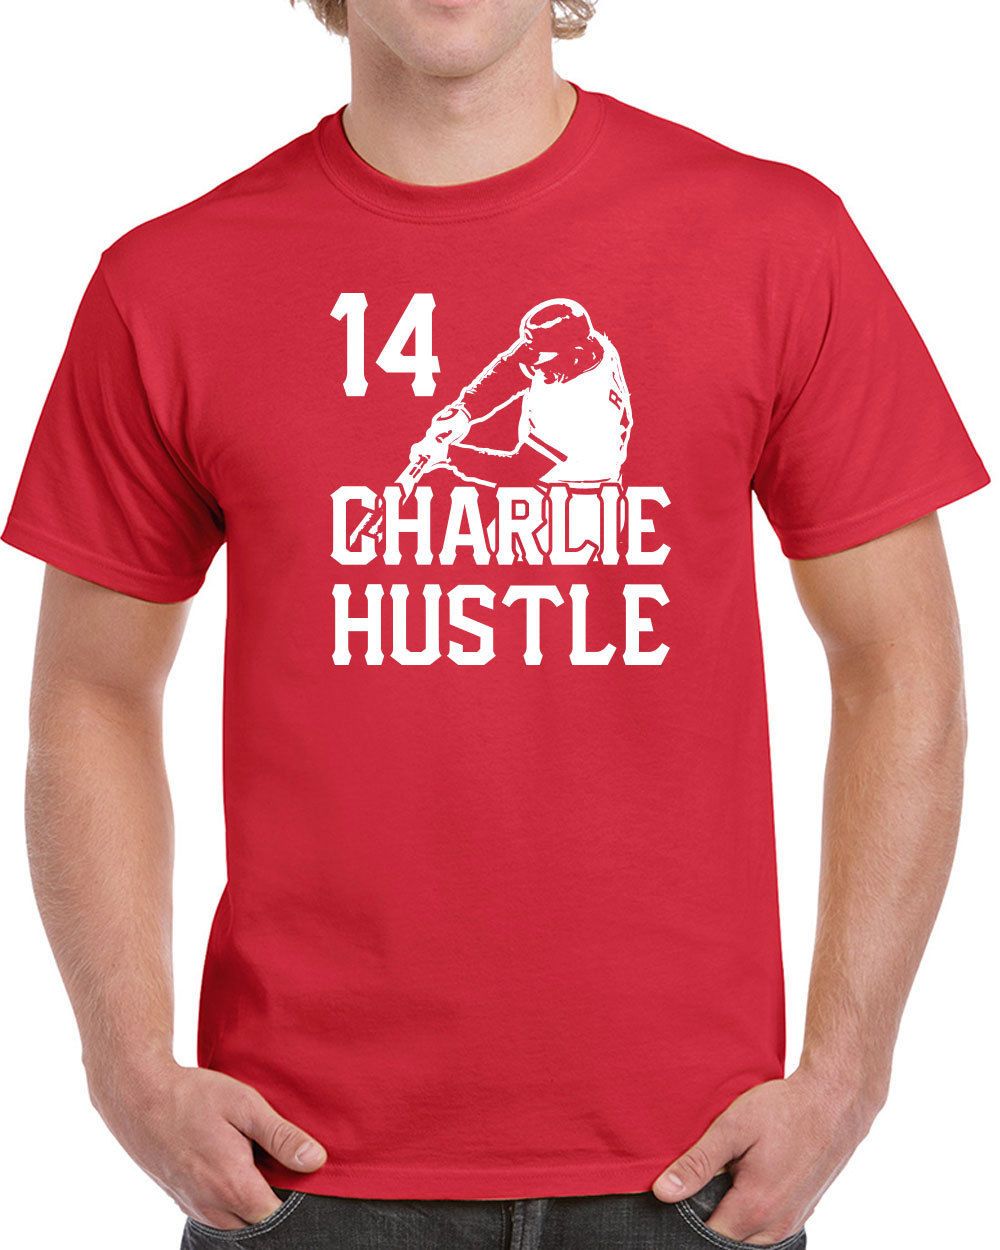 charlie hustle t shirts